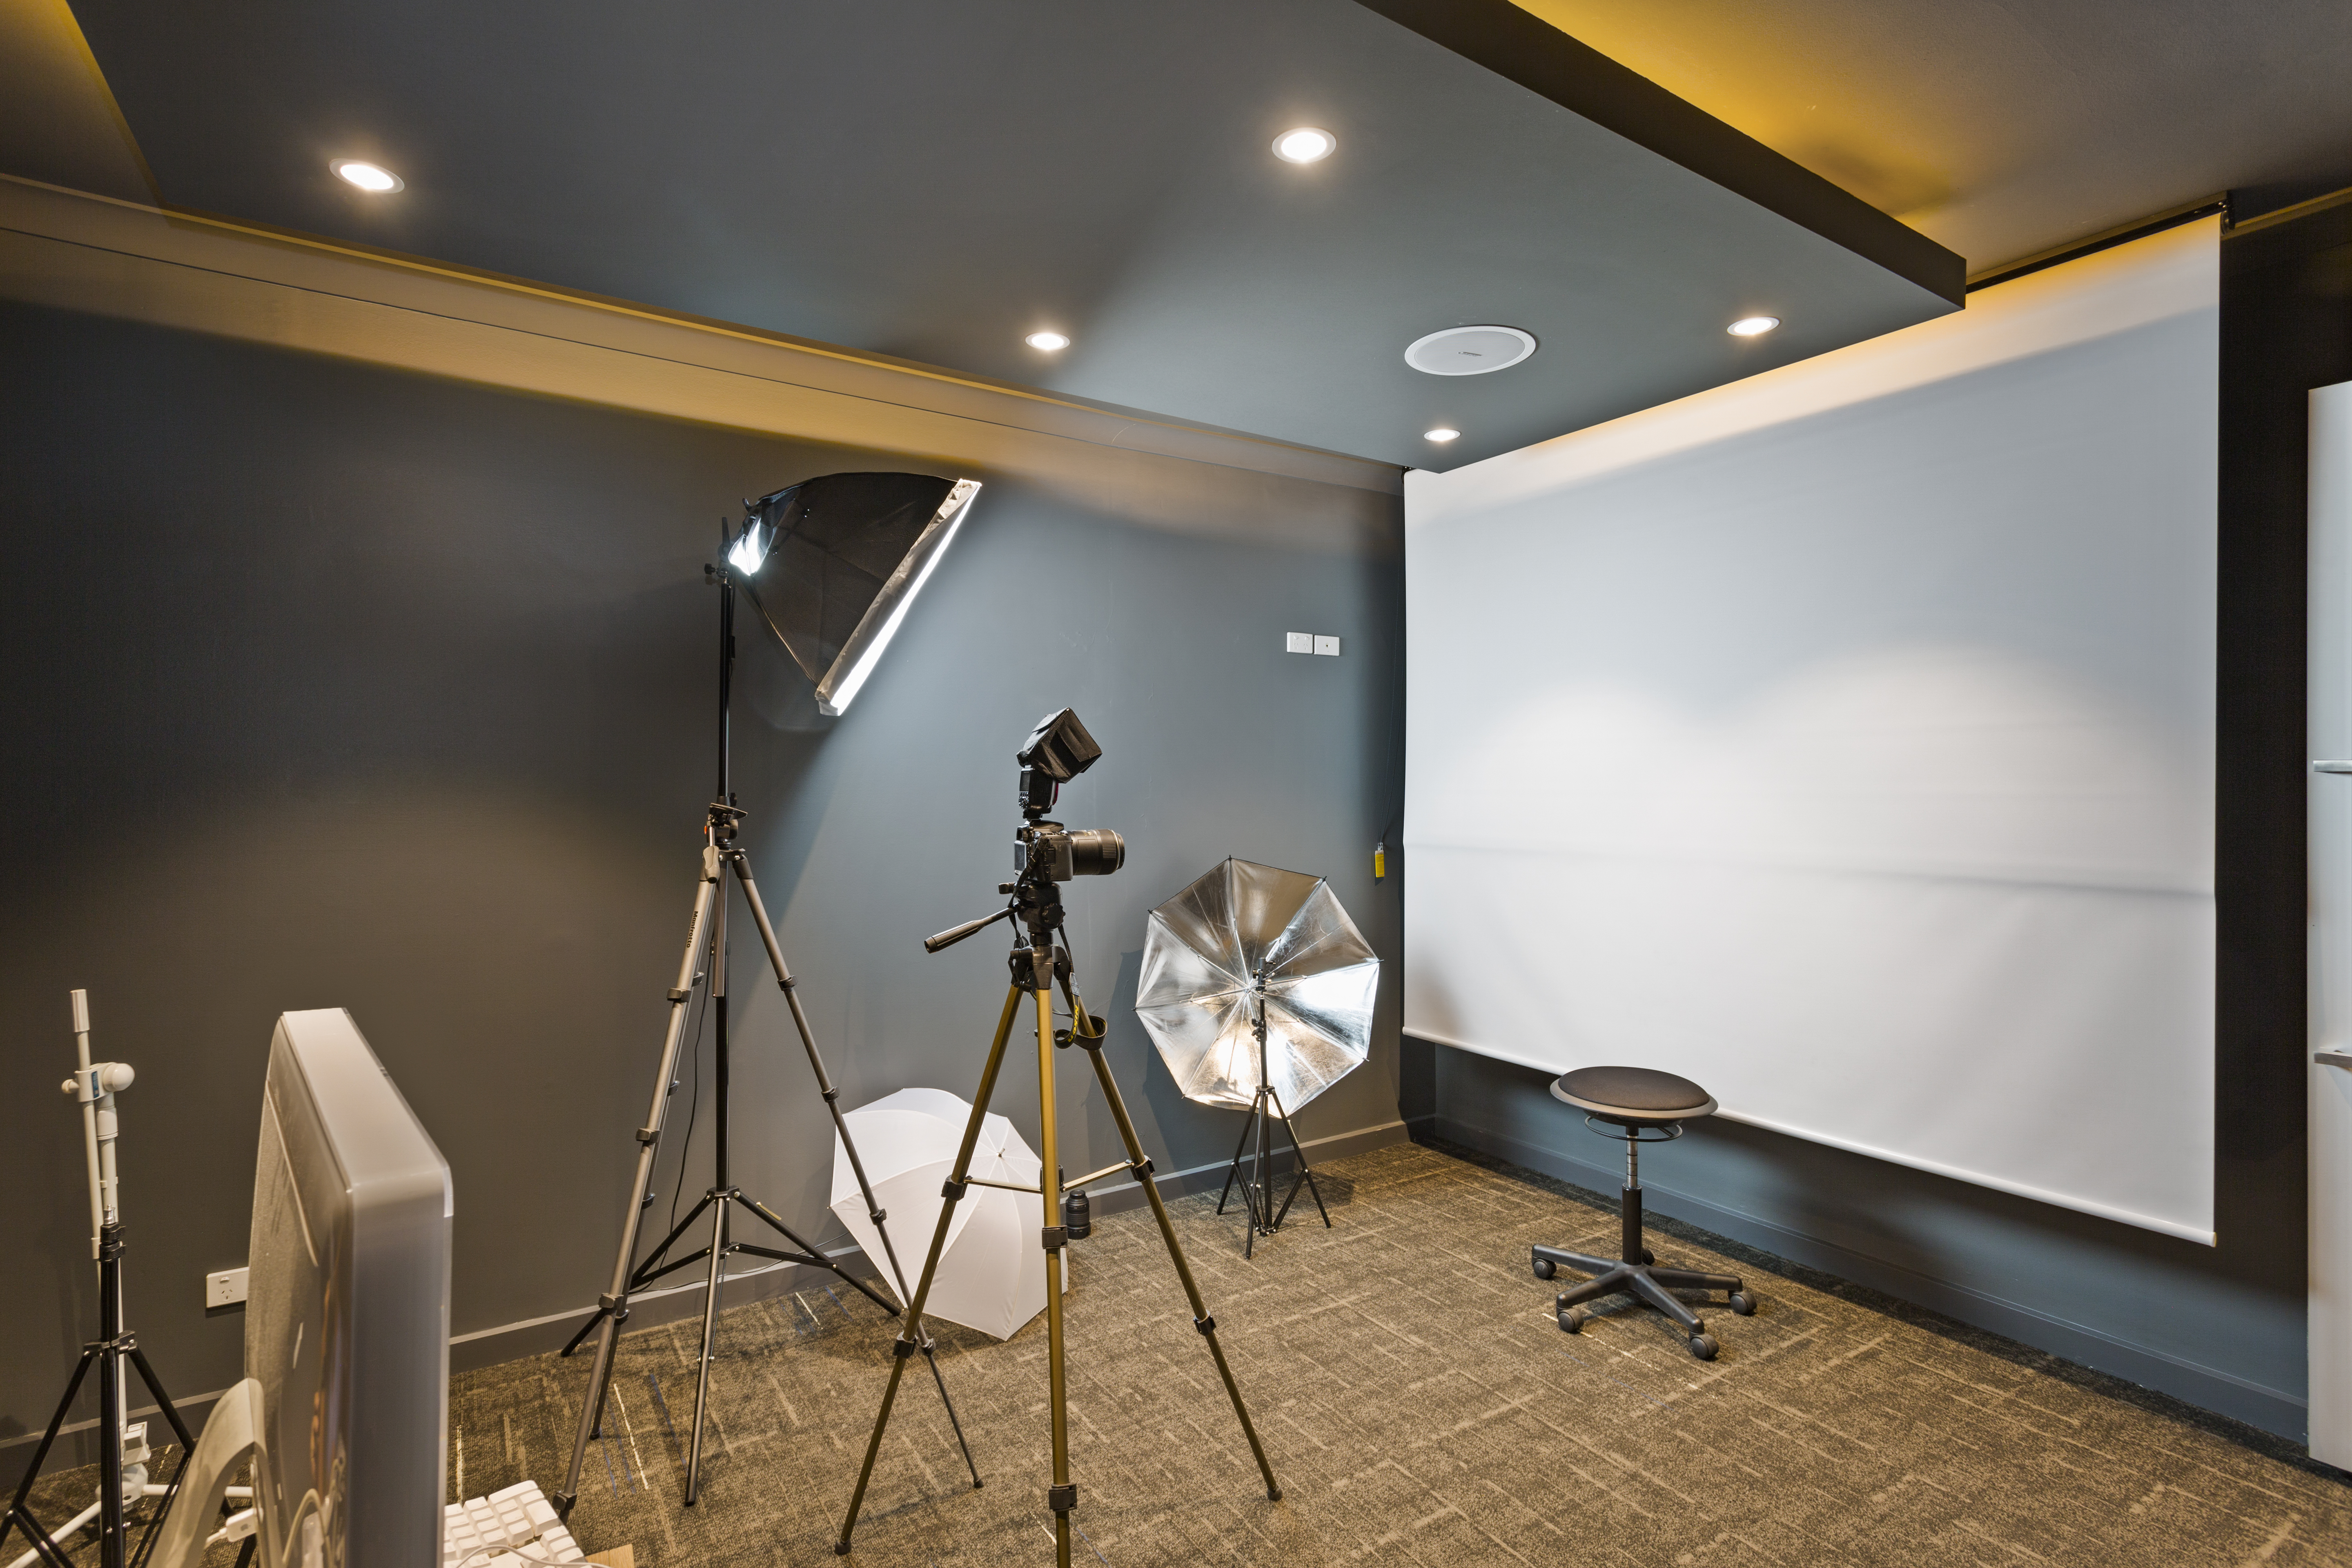 Studio setup with DSLR camera, softboxes, reflectors and screen backdrop.